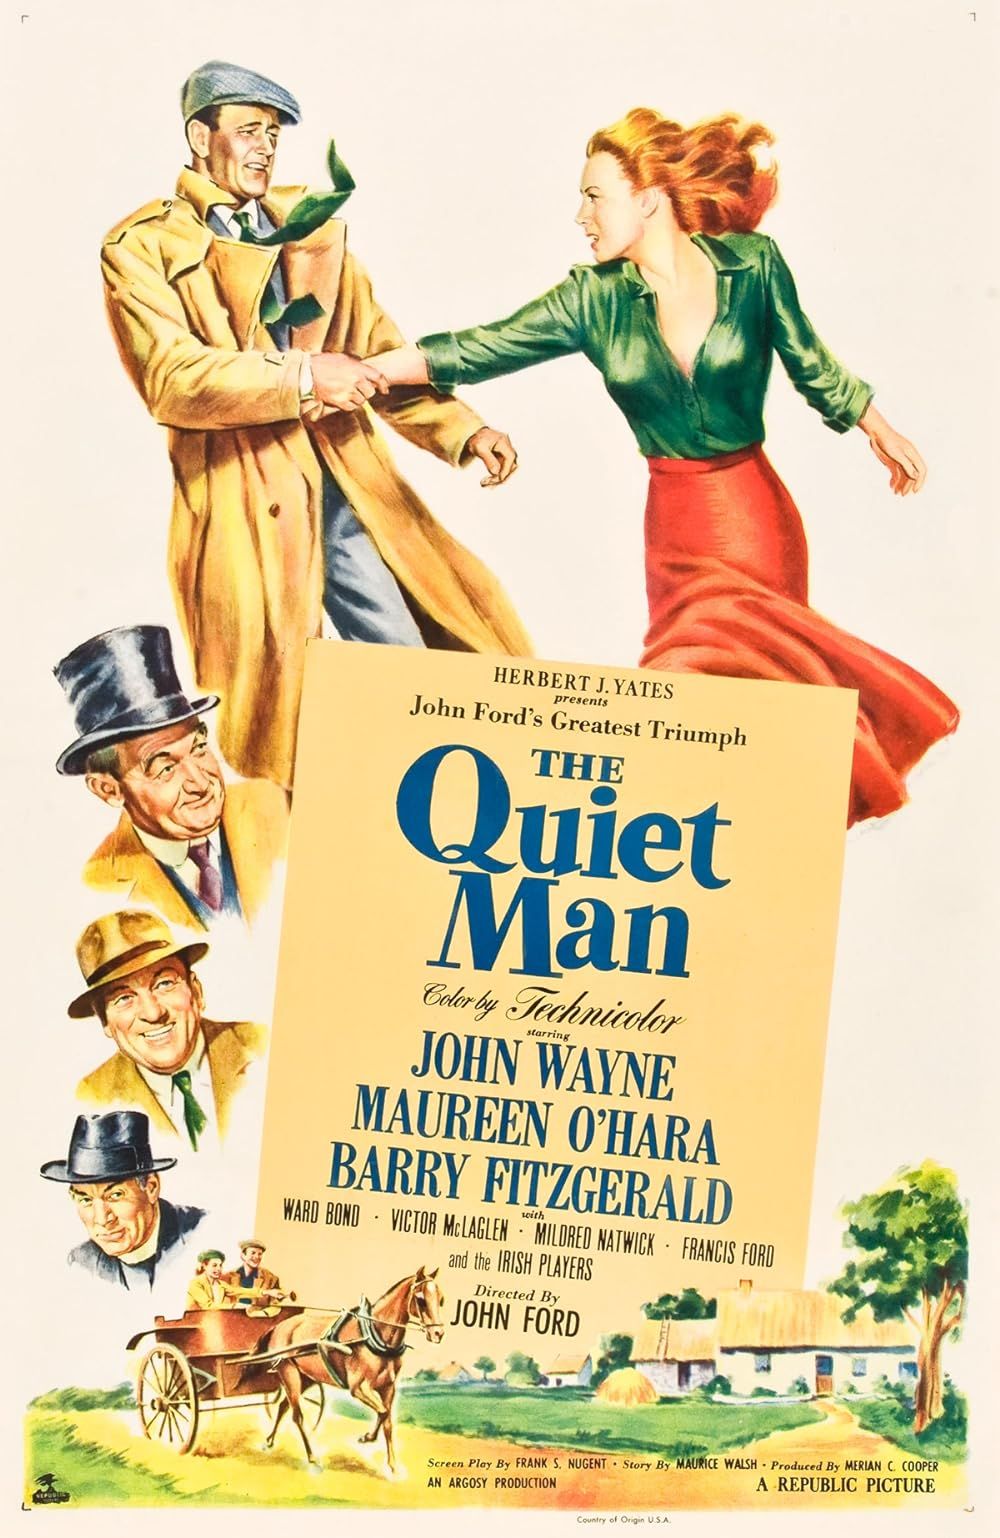 Official poster for The Quiet Man starring John Wayne and Maureen O'Hara